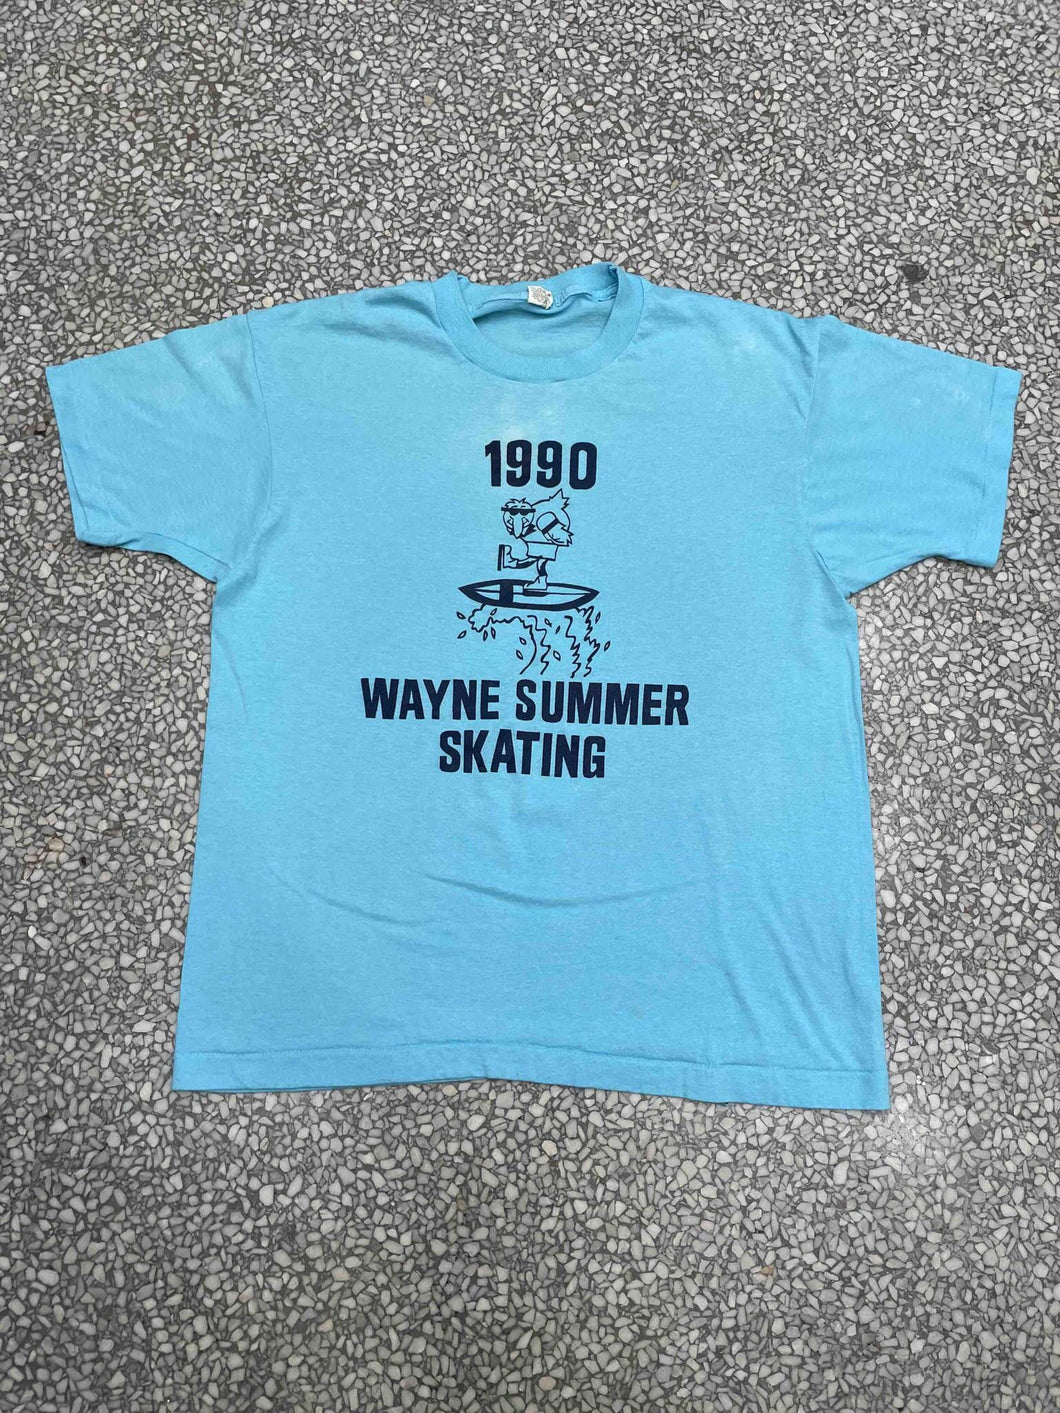 Wayne Summer Skating Vintage 1990 Paper Thin Blue ABC Vintage 